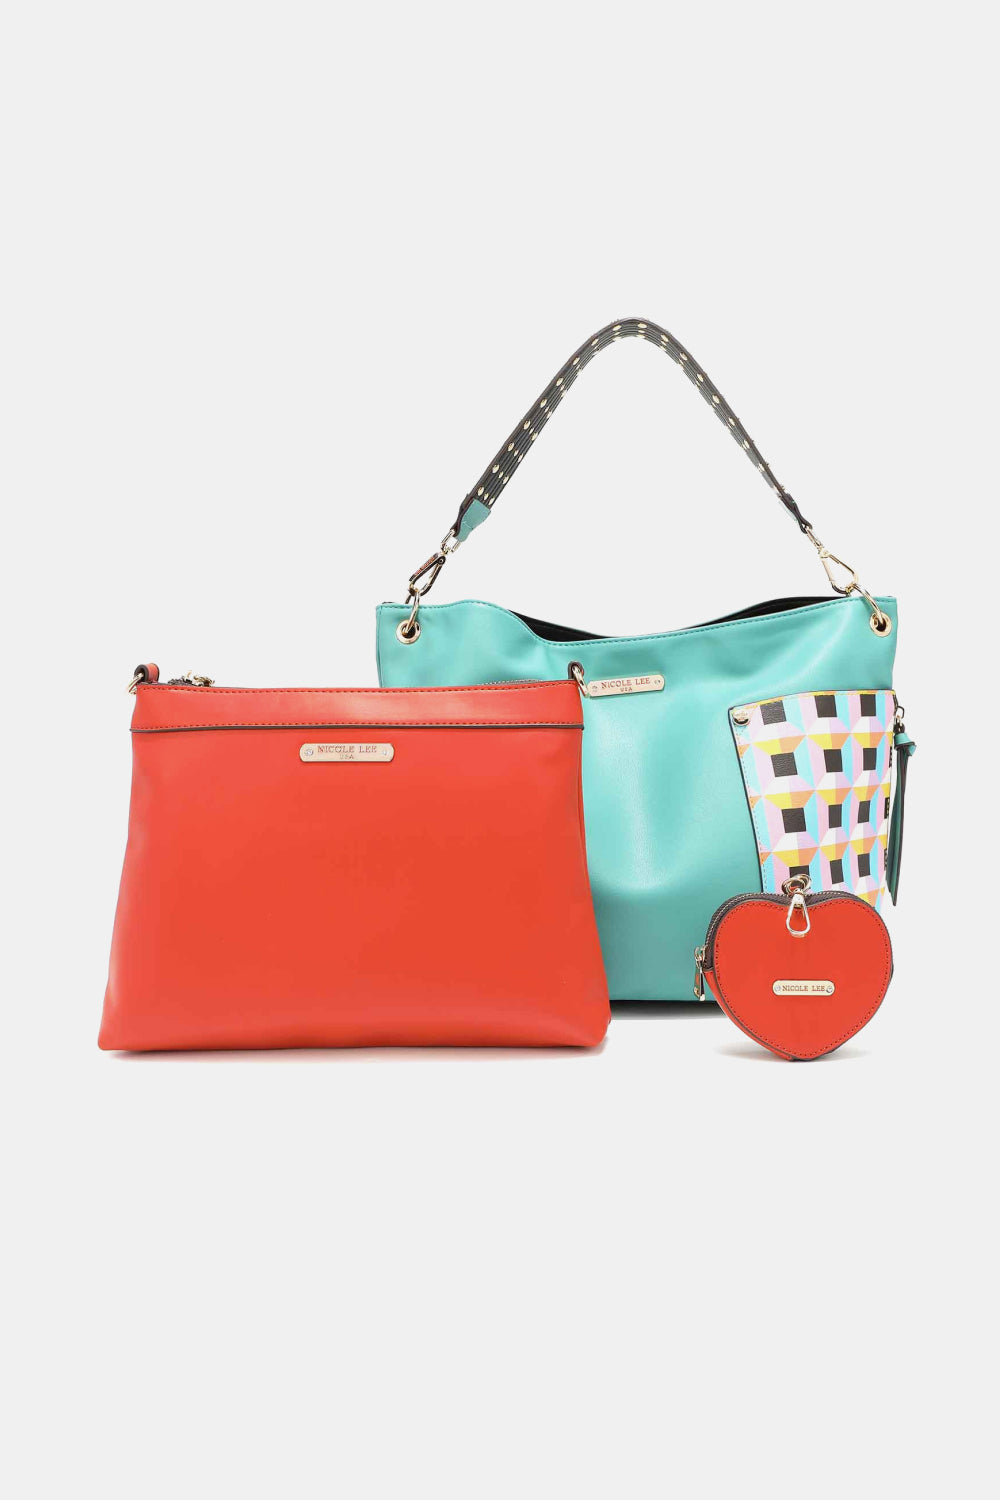 Nicole Lee USA Quihn 3-Piece Handbag Set - Tigbul's Fashion